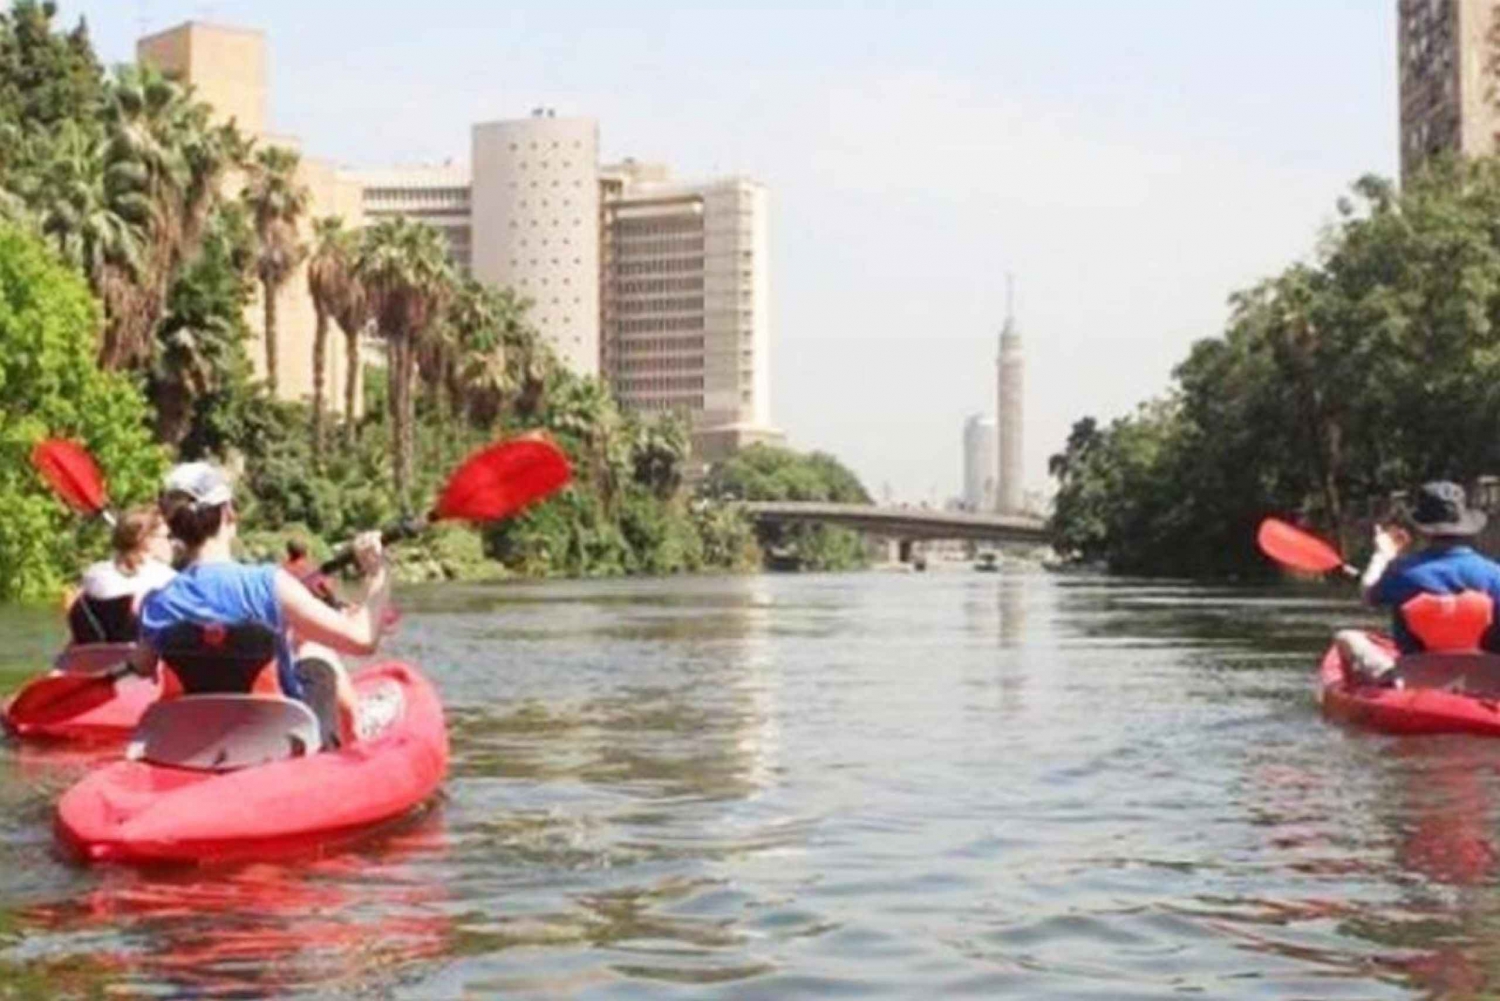 Cairo Kayaking Tour on the River Nile